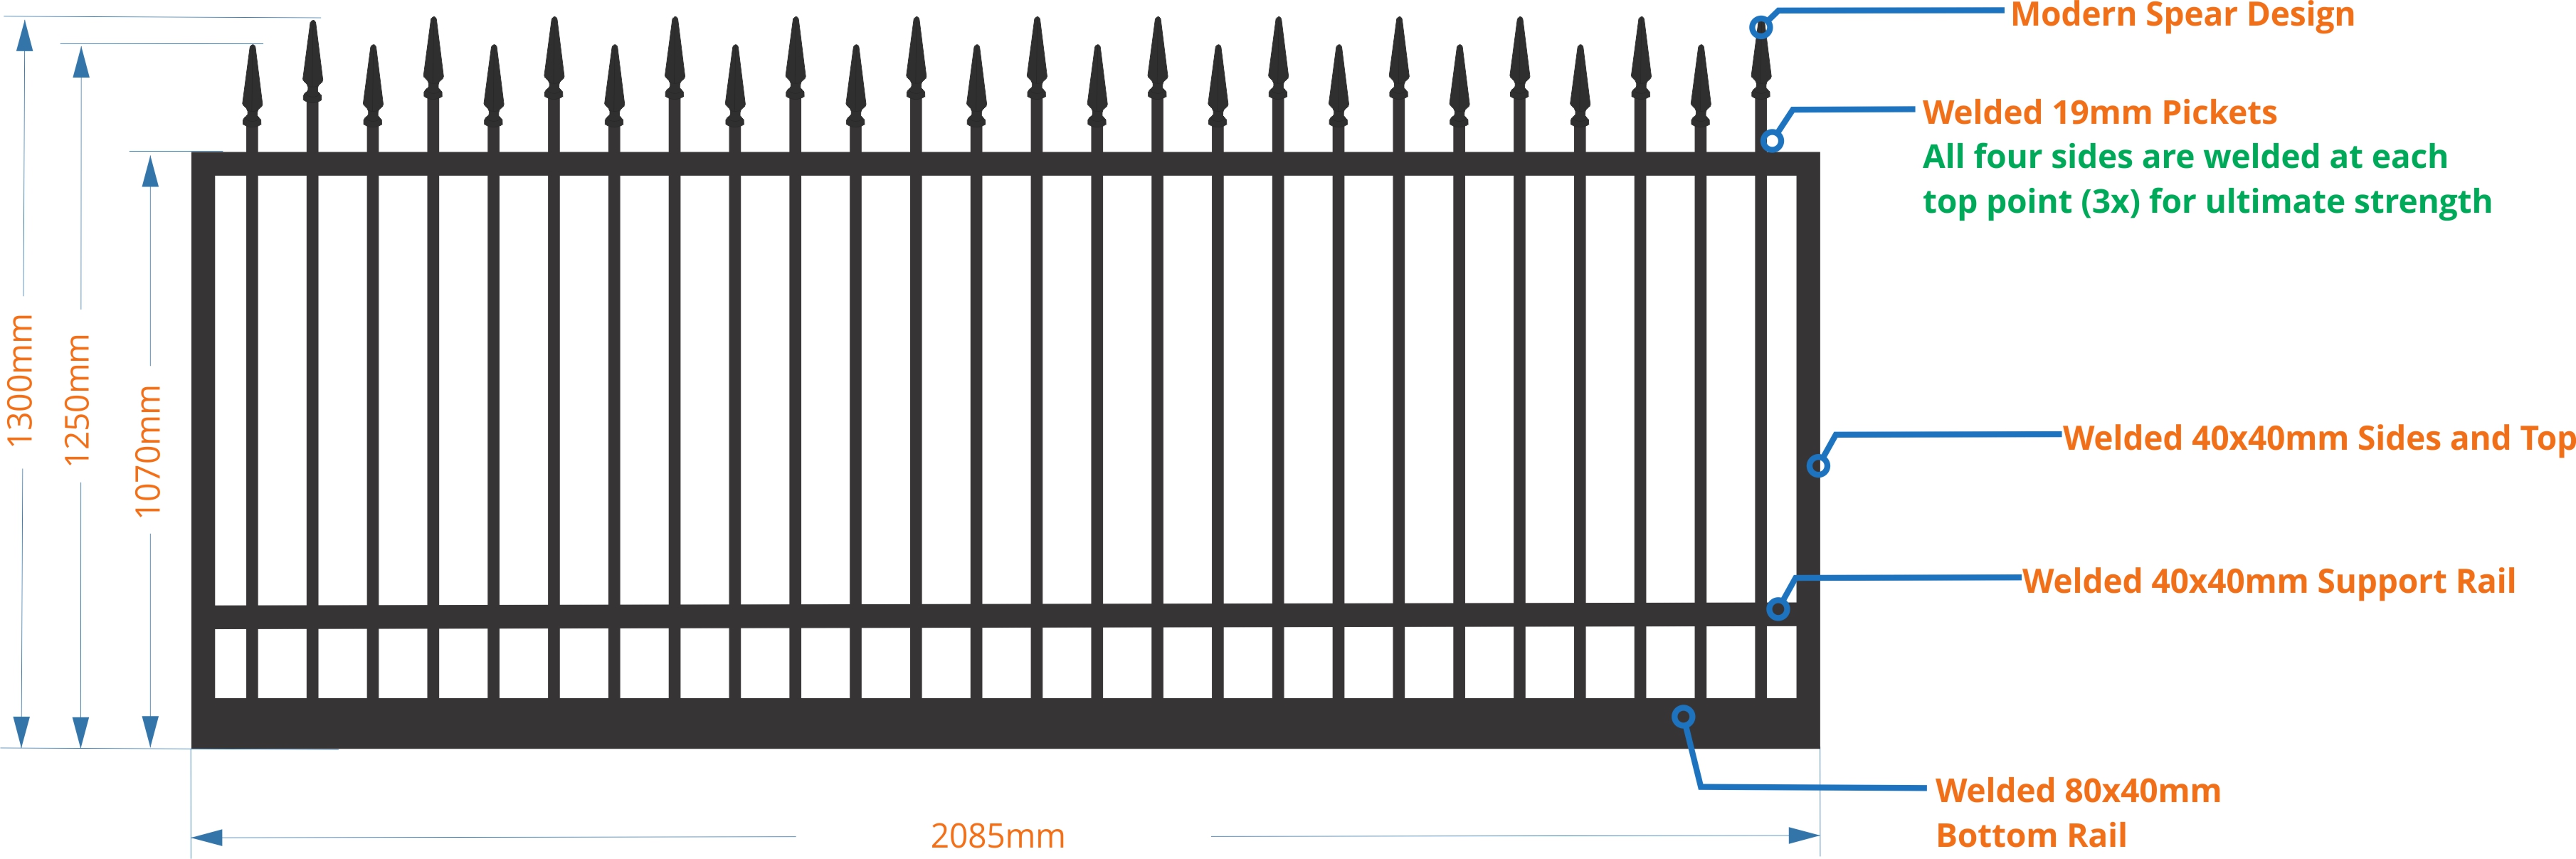 gate measurements high low spear design